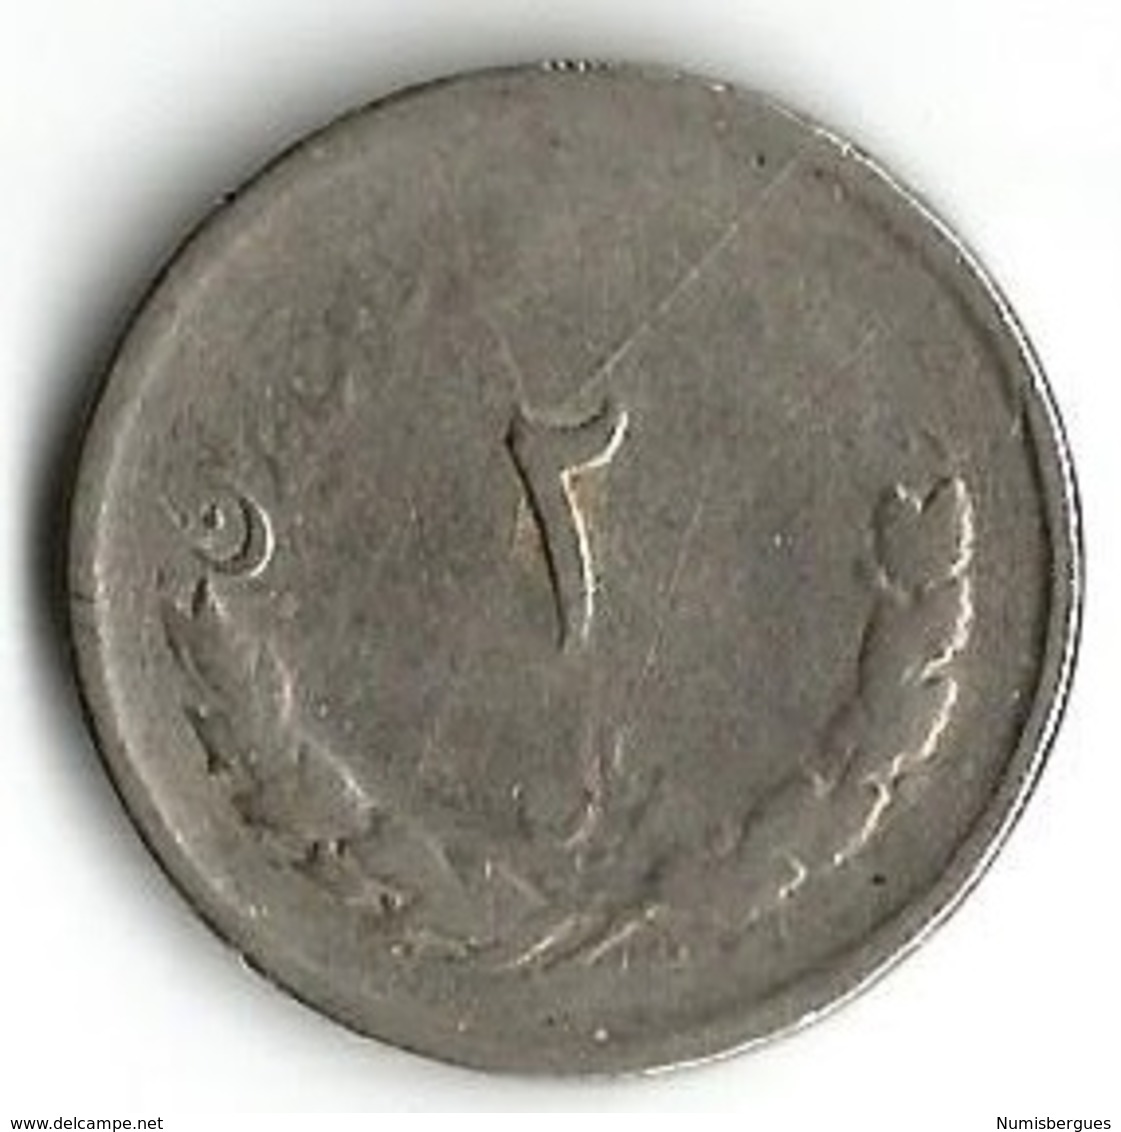 1 Pièce De Monnaie 2 Rials 1952 - Iran